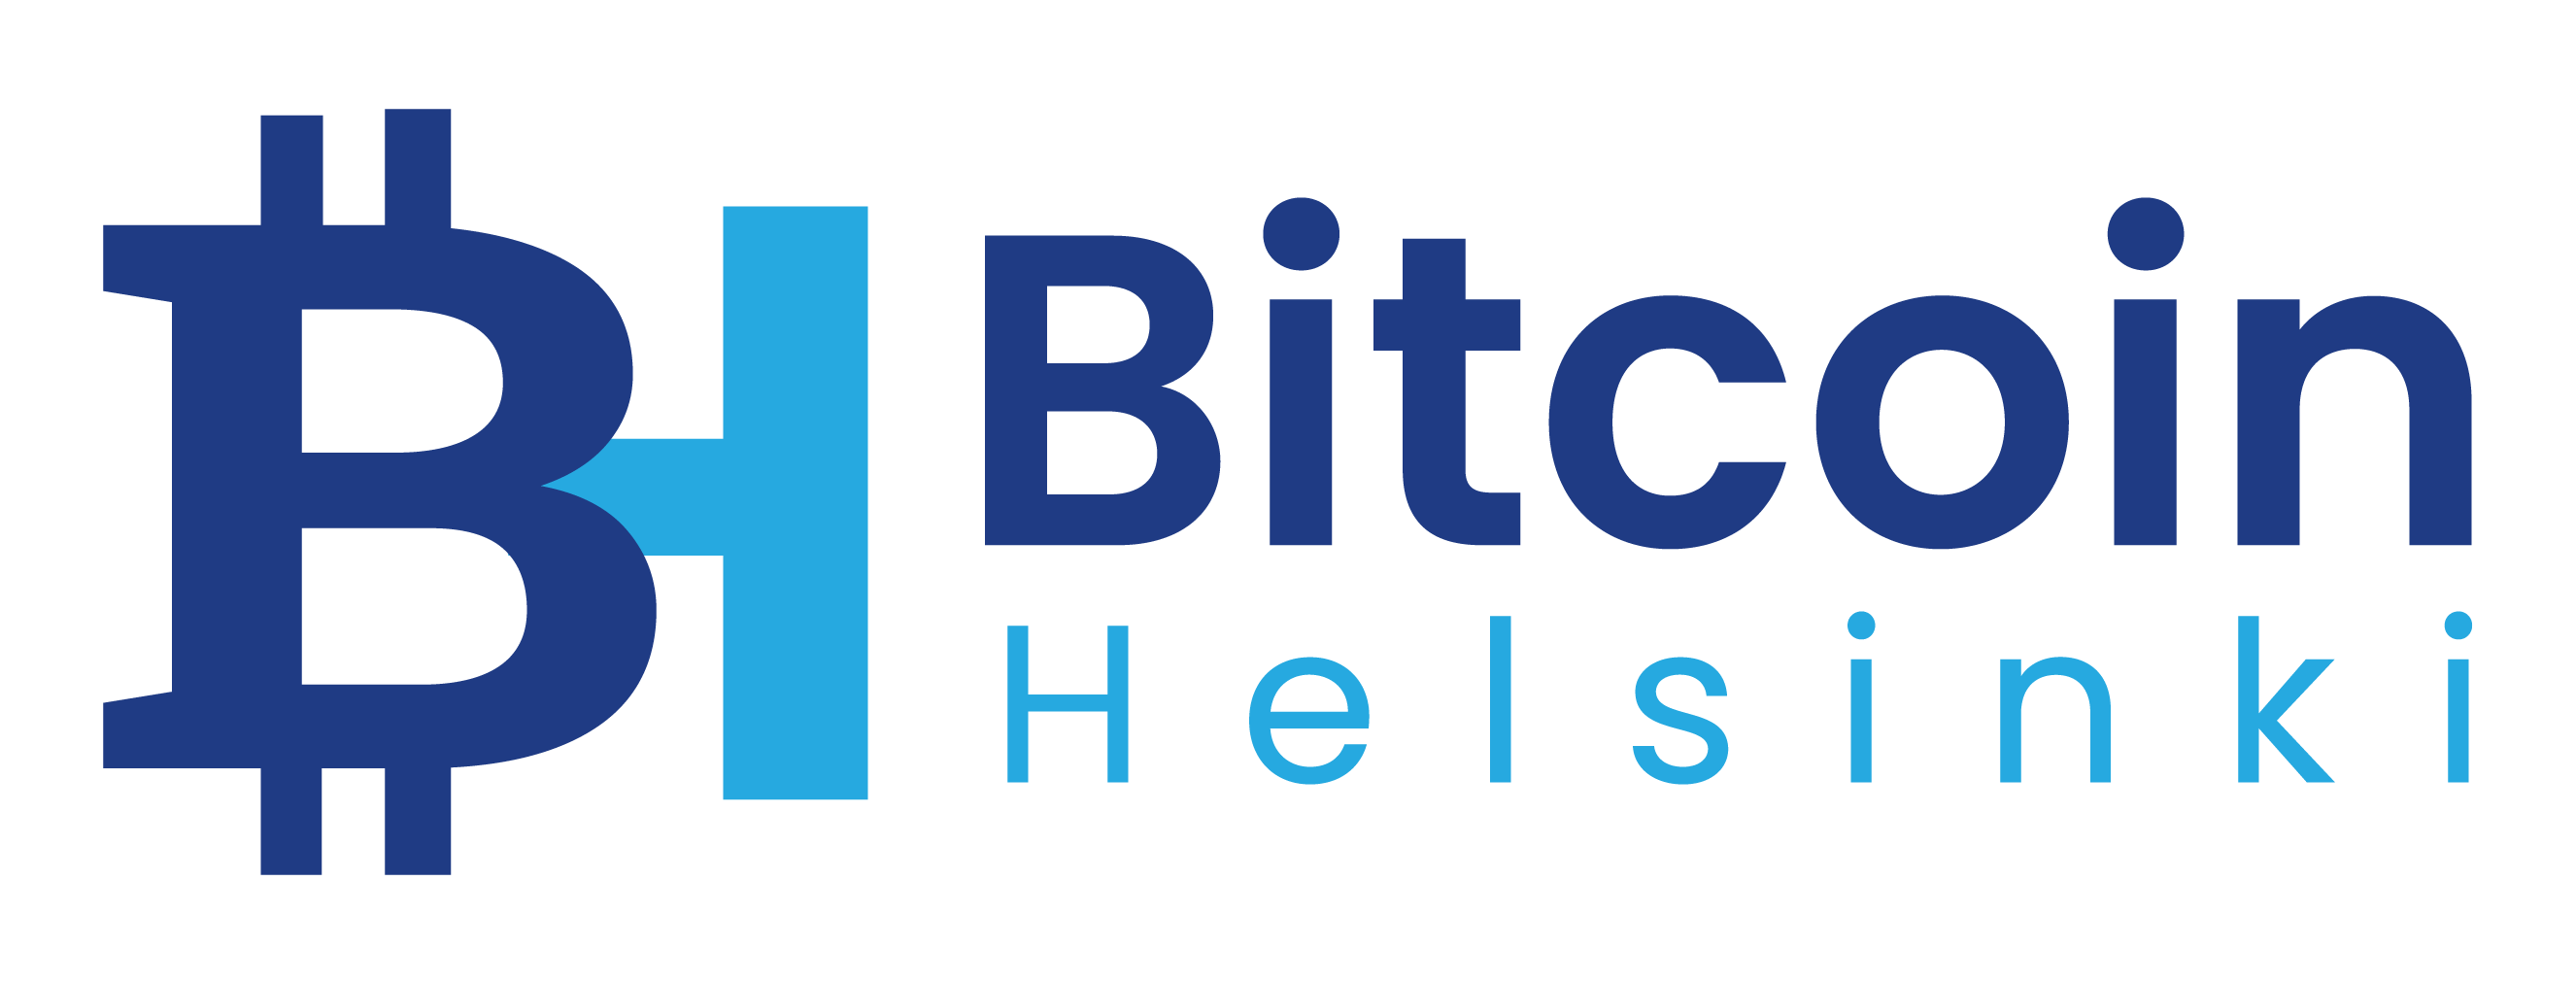 Bitcoin Helsinki - Bitcoin Helsinki Ekibi